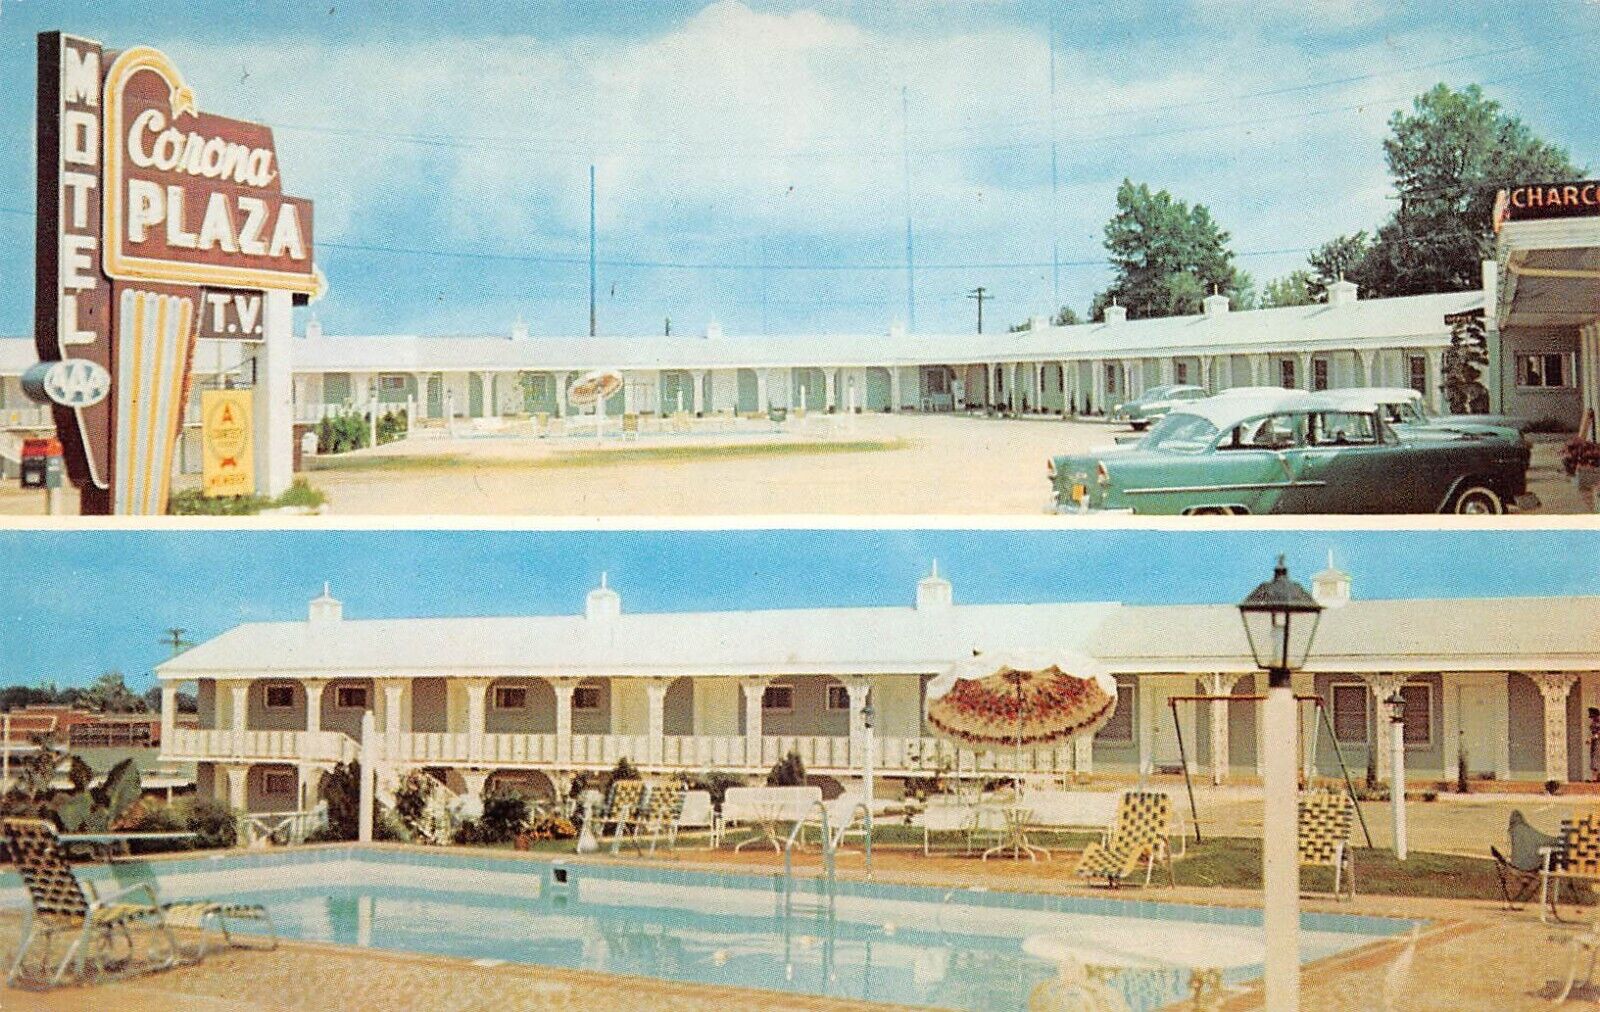 Pride of Corinth Corona Plaza Motel Corinth Mississippi 1950s Cars Pool Postcard